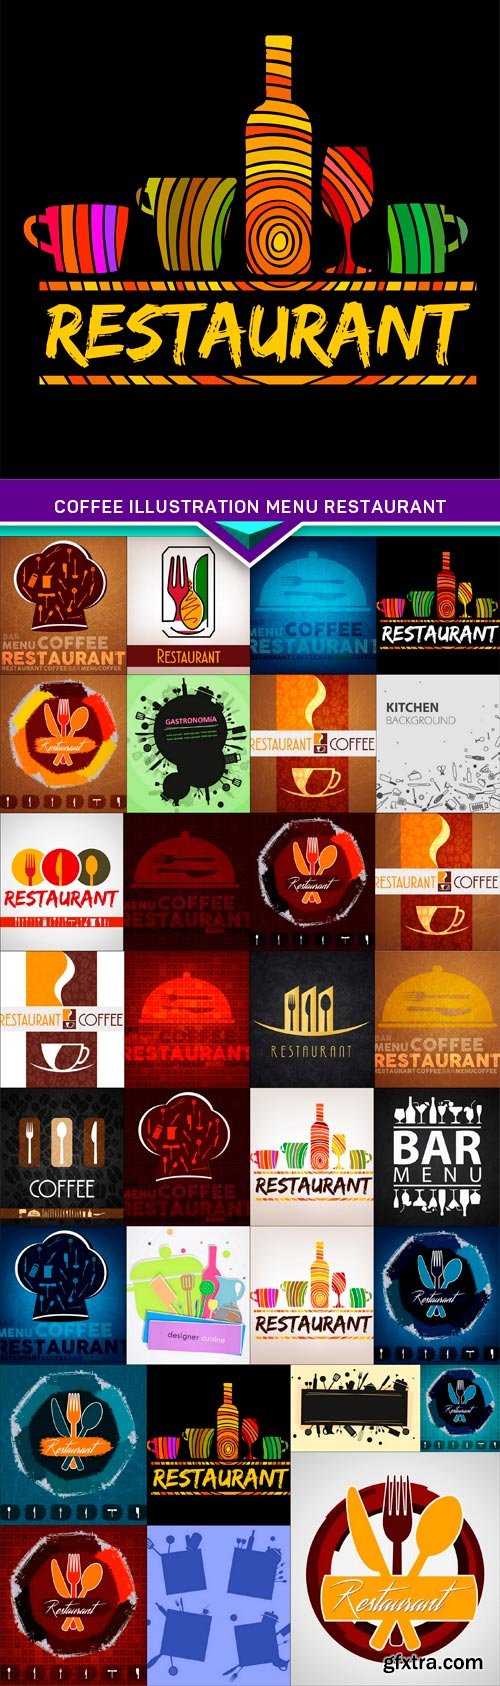 Coffee illustration menu restaurant 31x EPS